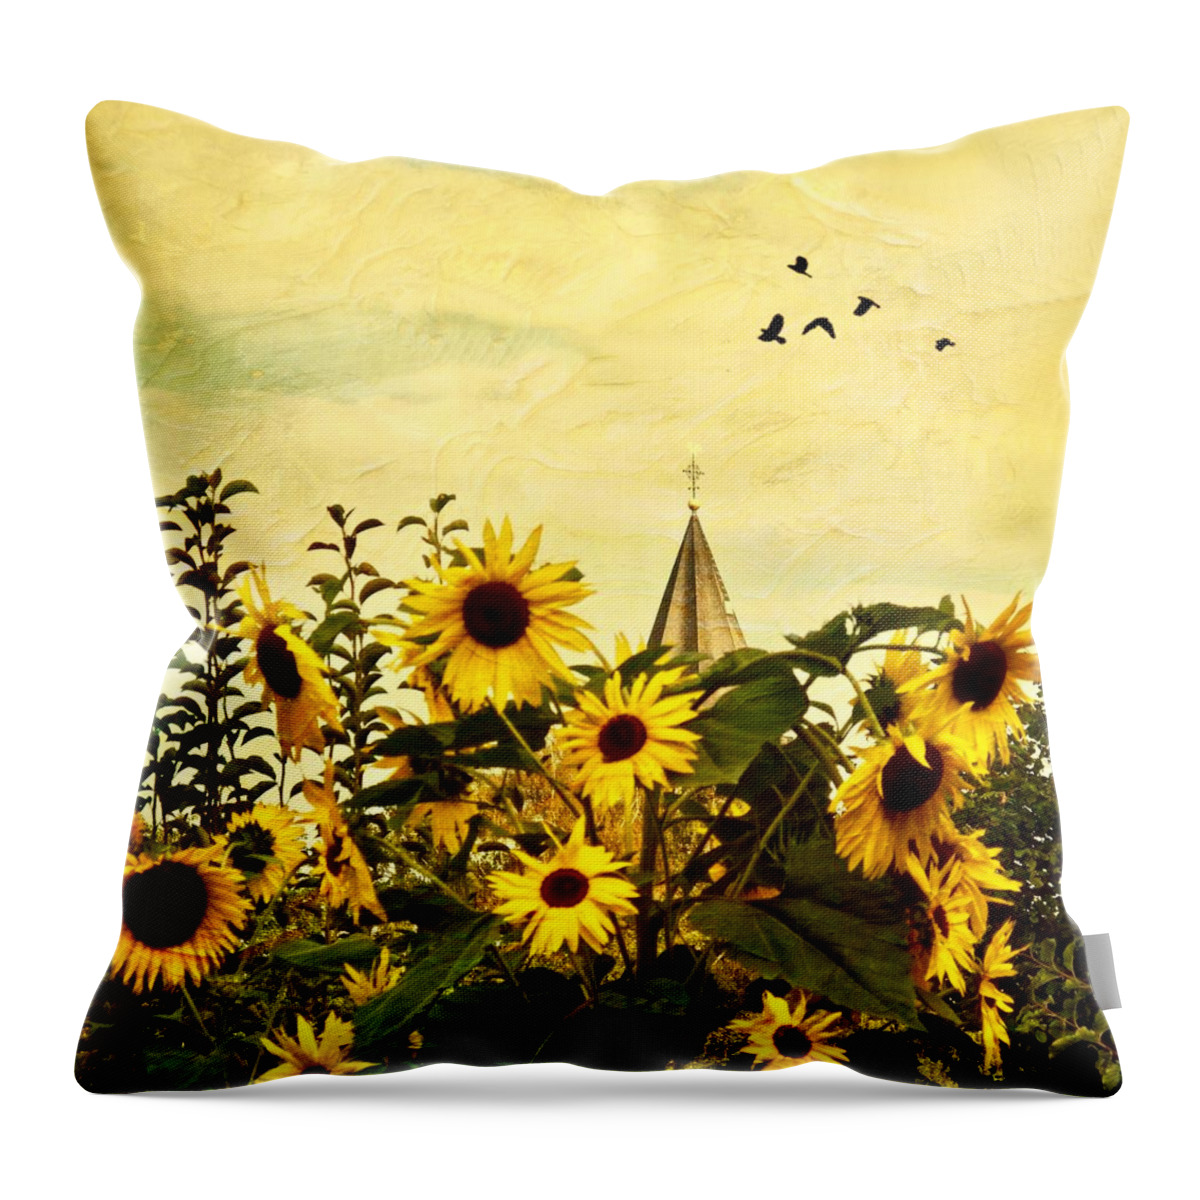 Iphone Throw Pillow featuring the photograph Sunflower Serenade by Richard Cummings